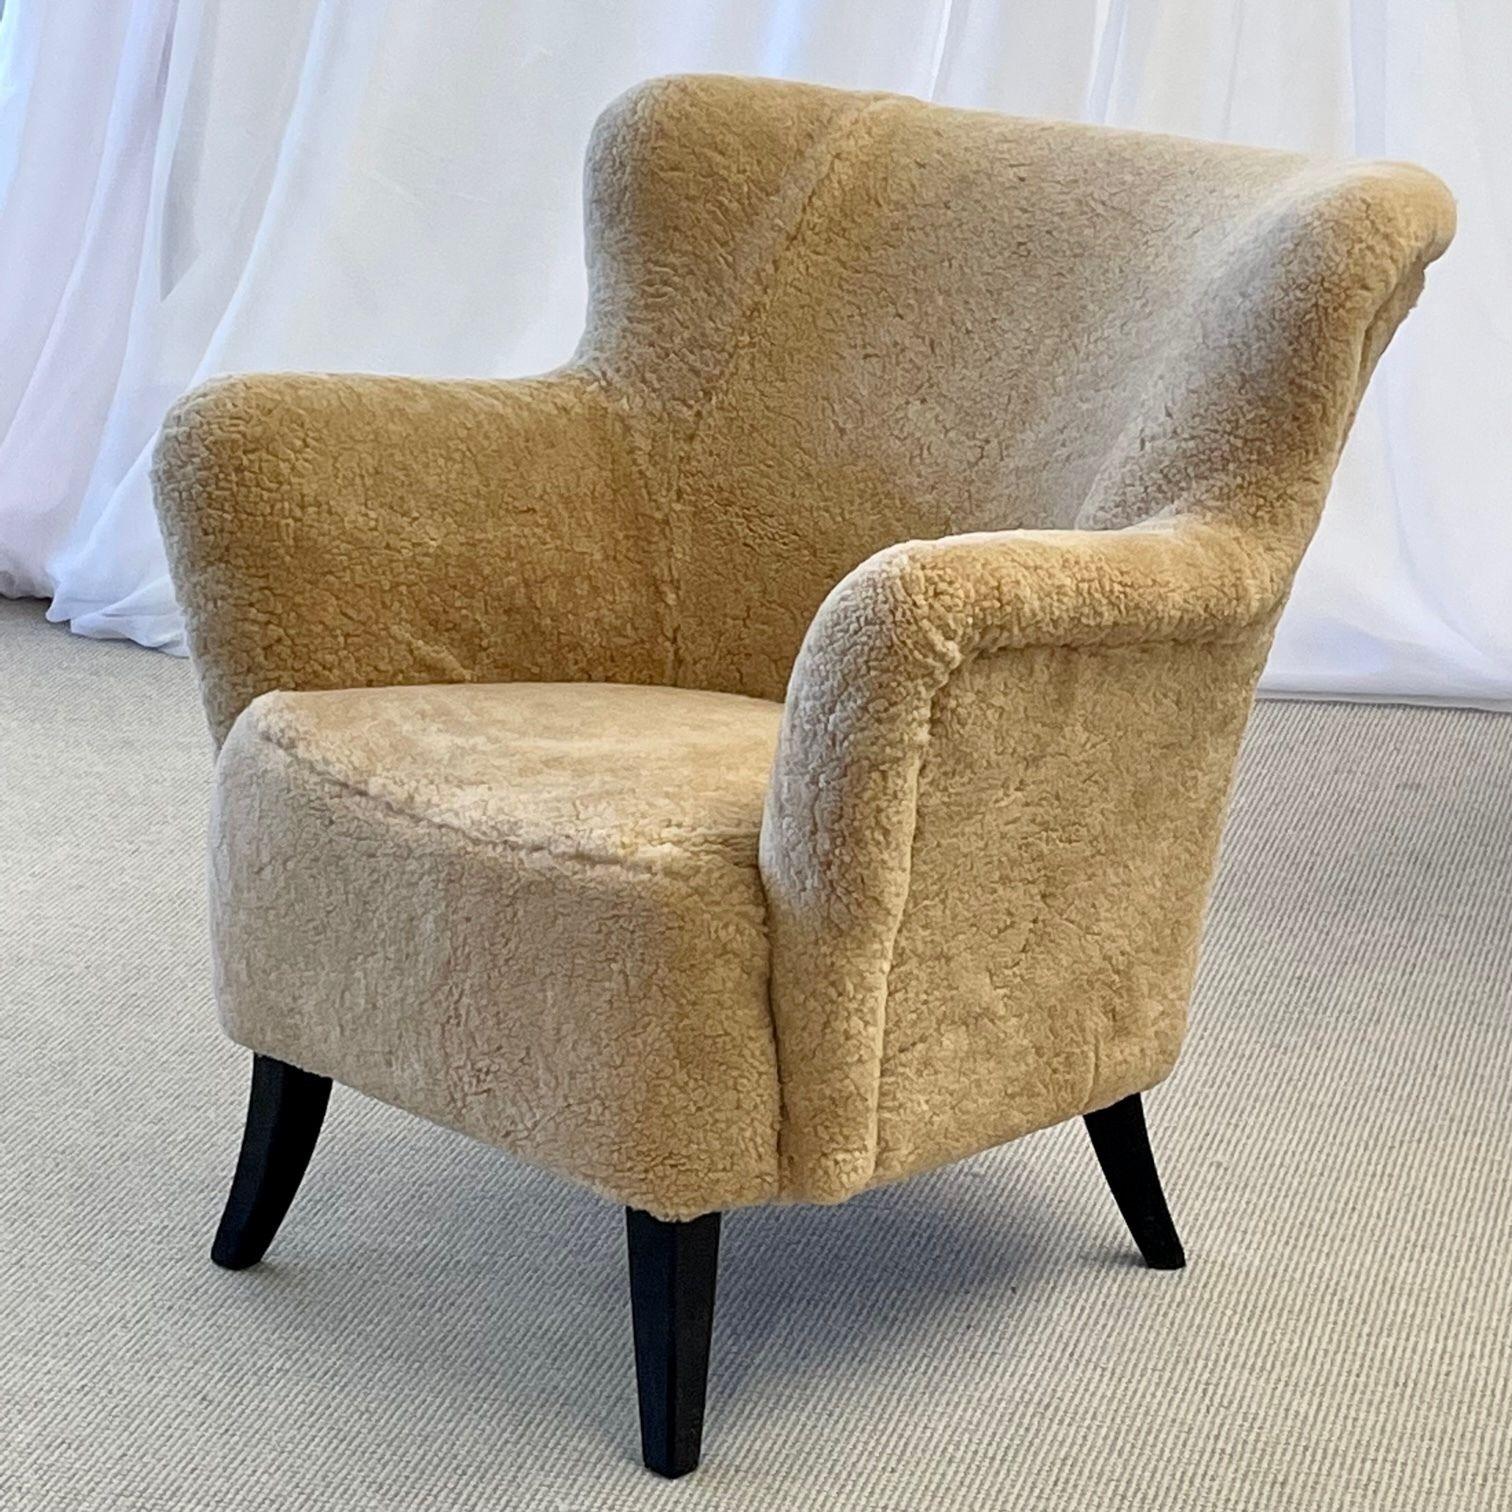 Danish Mid-Century Modern, Lounge Chairs, Sheepskin, Ebonized Wood, 1950s For Sale 2